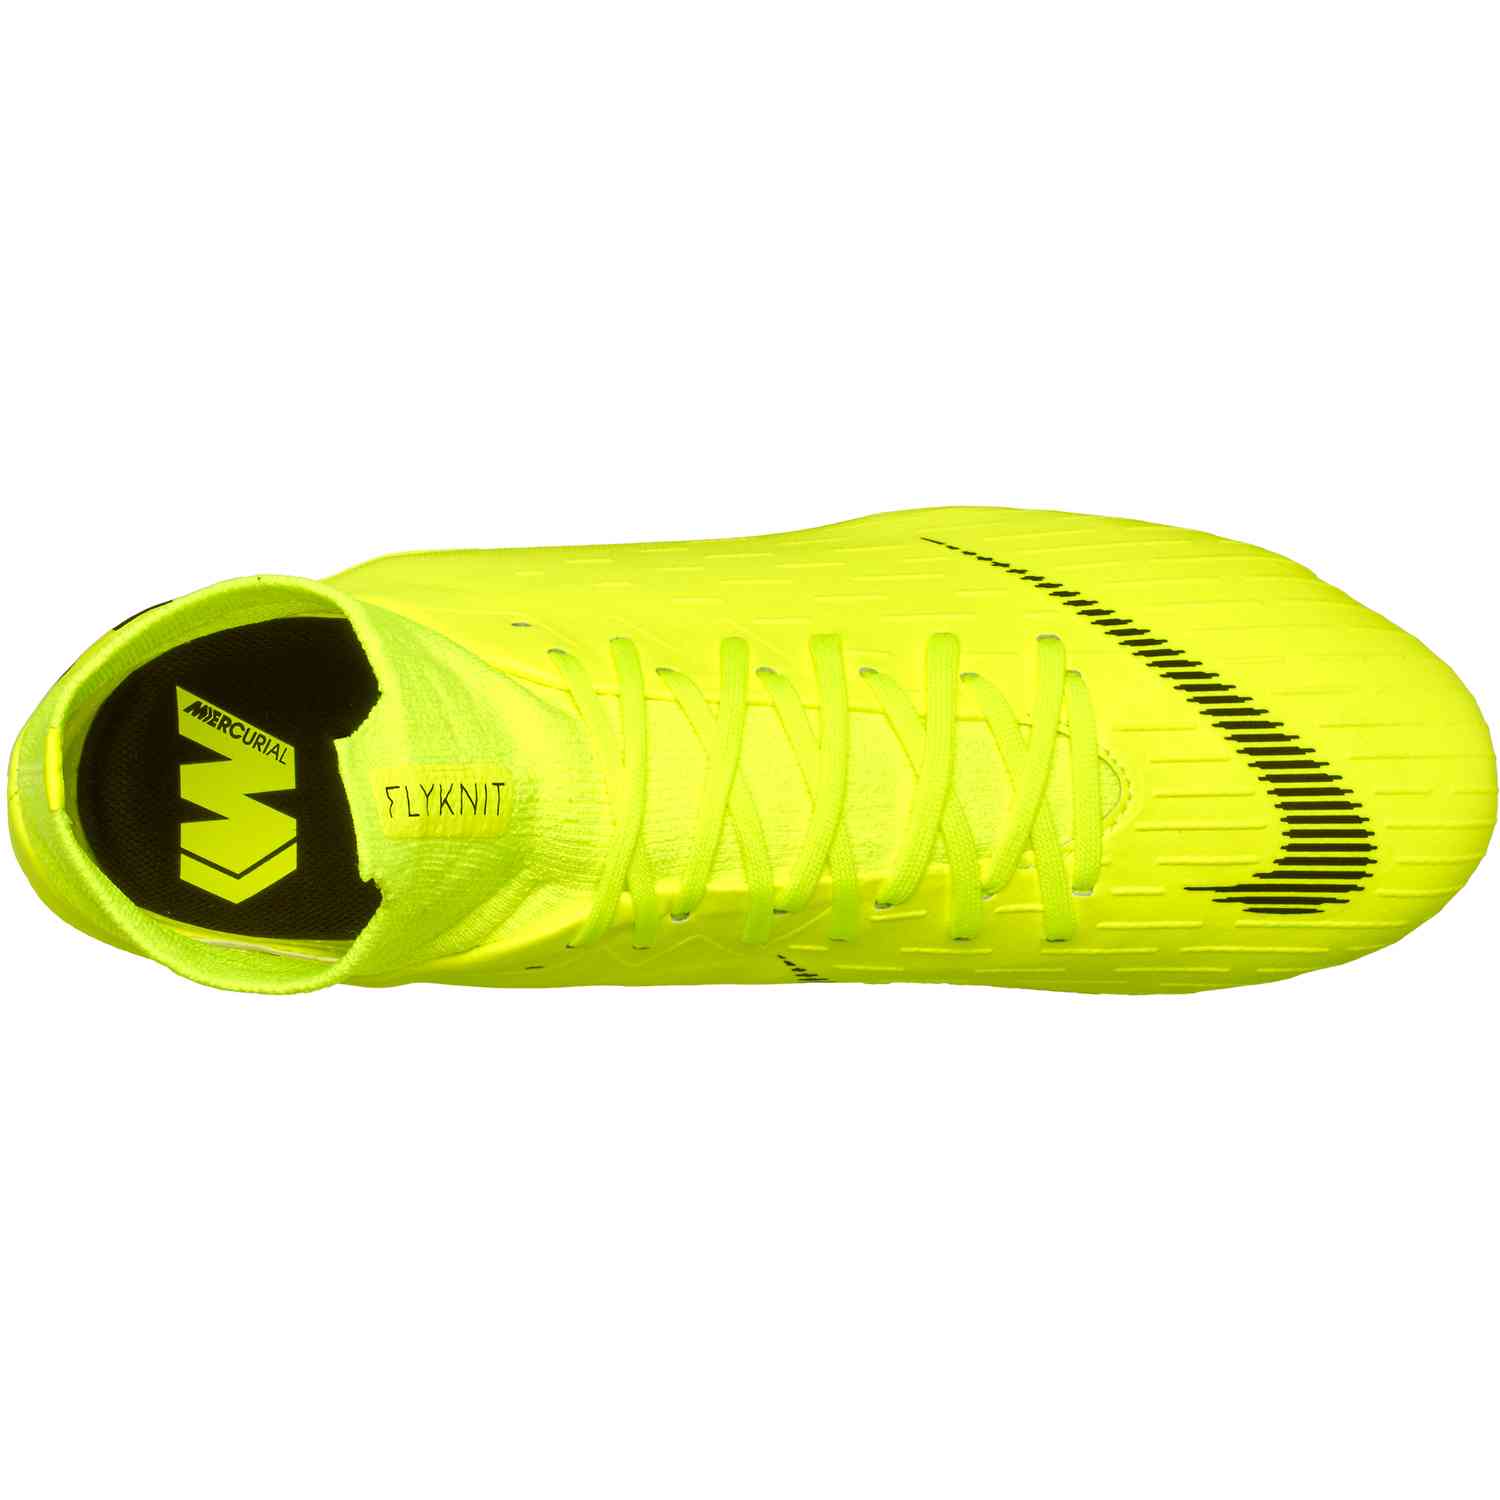 Nike Soccer Cleats Nike Mercurial Vapor 12 Elite FG Soccer Cleats